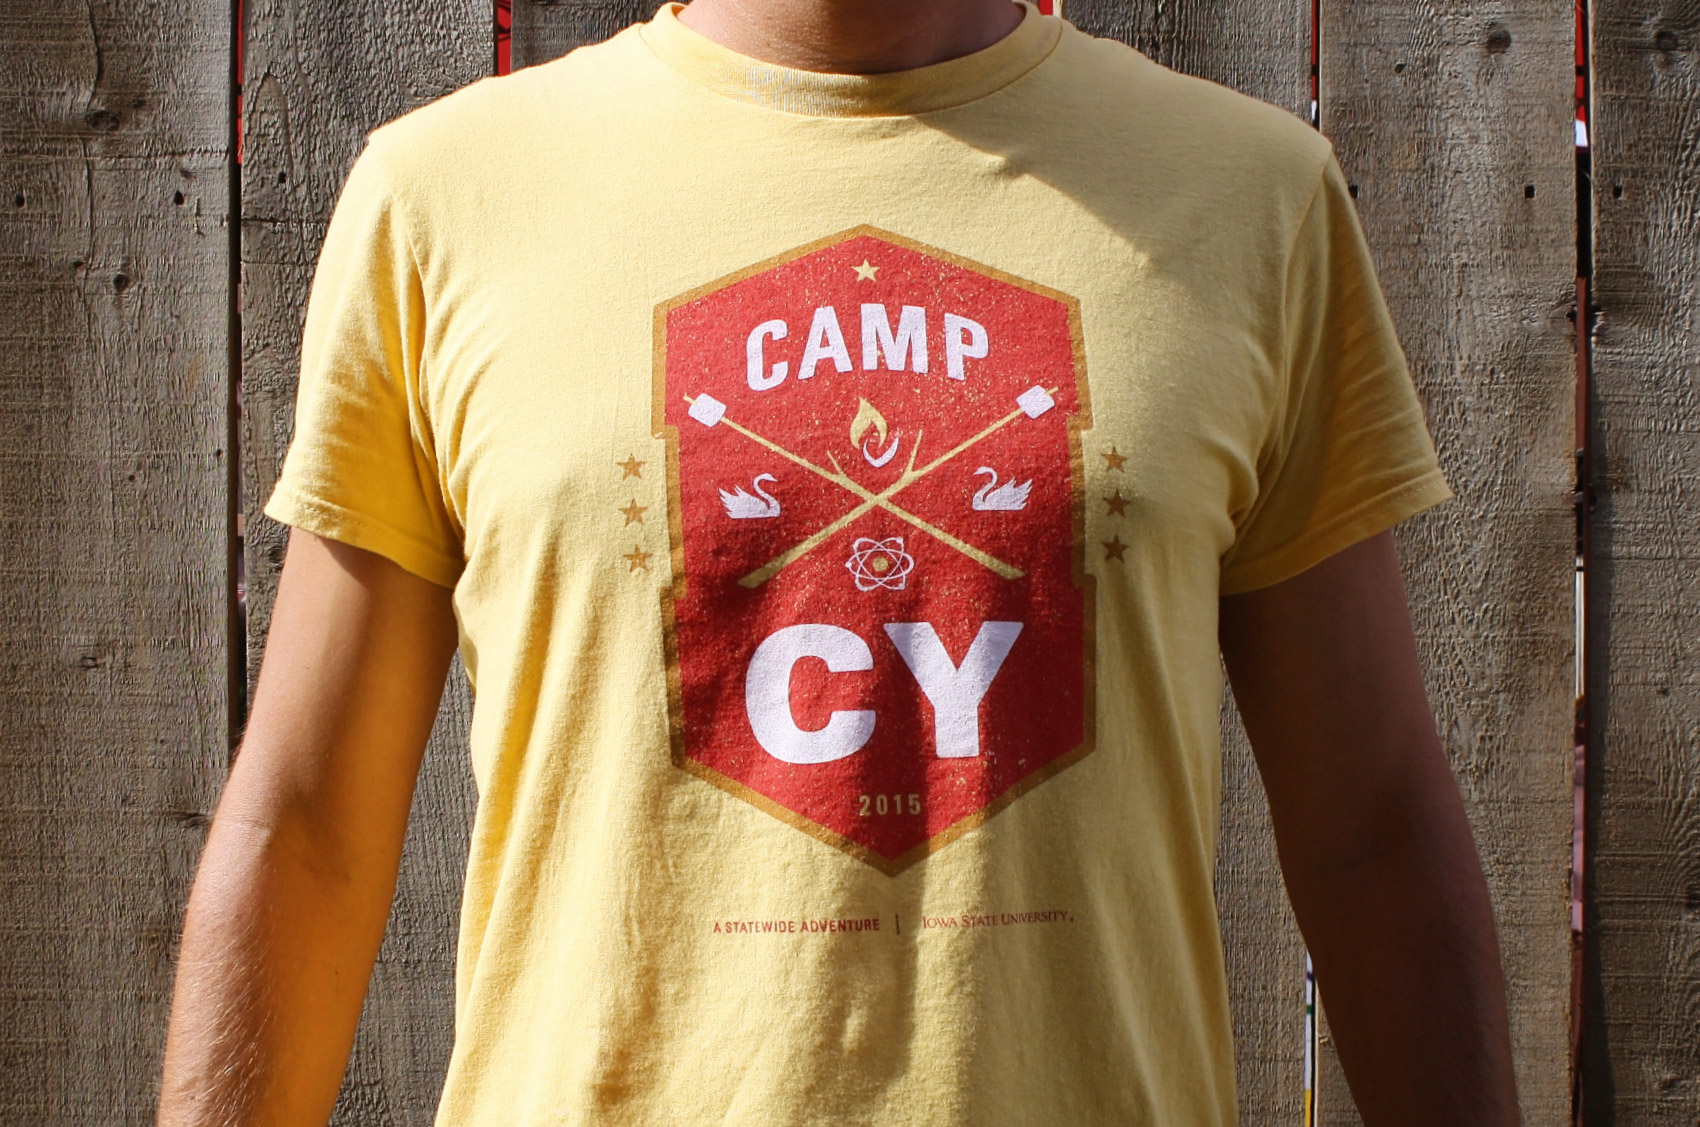 Camp CY T shirt design